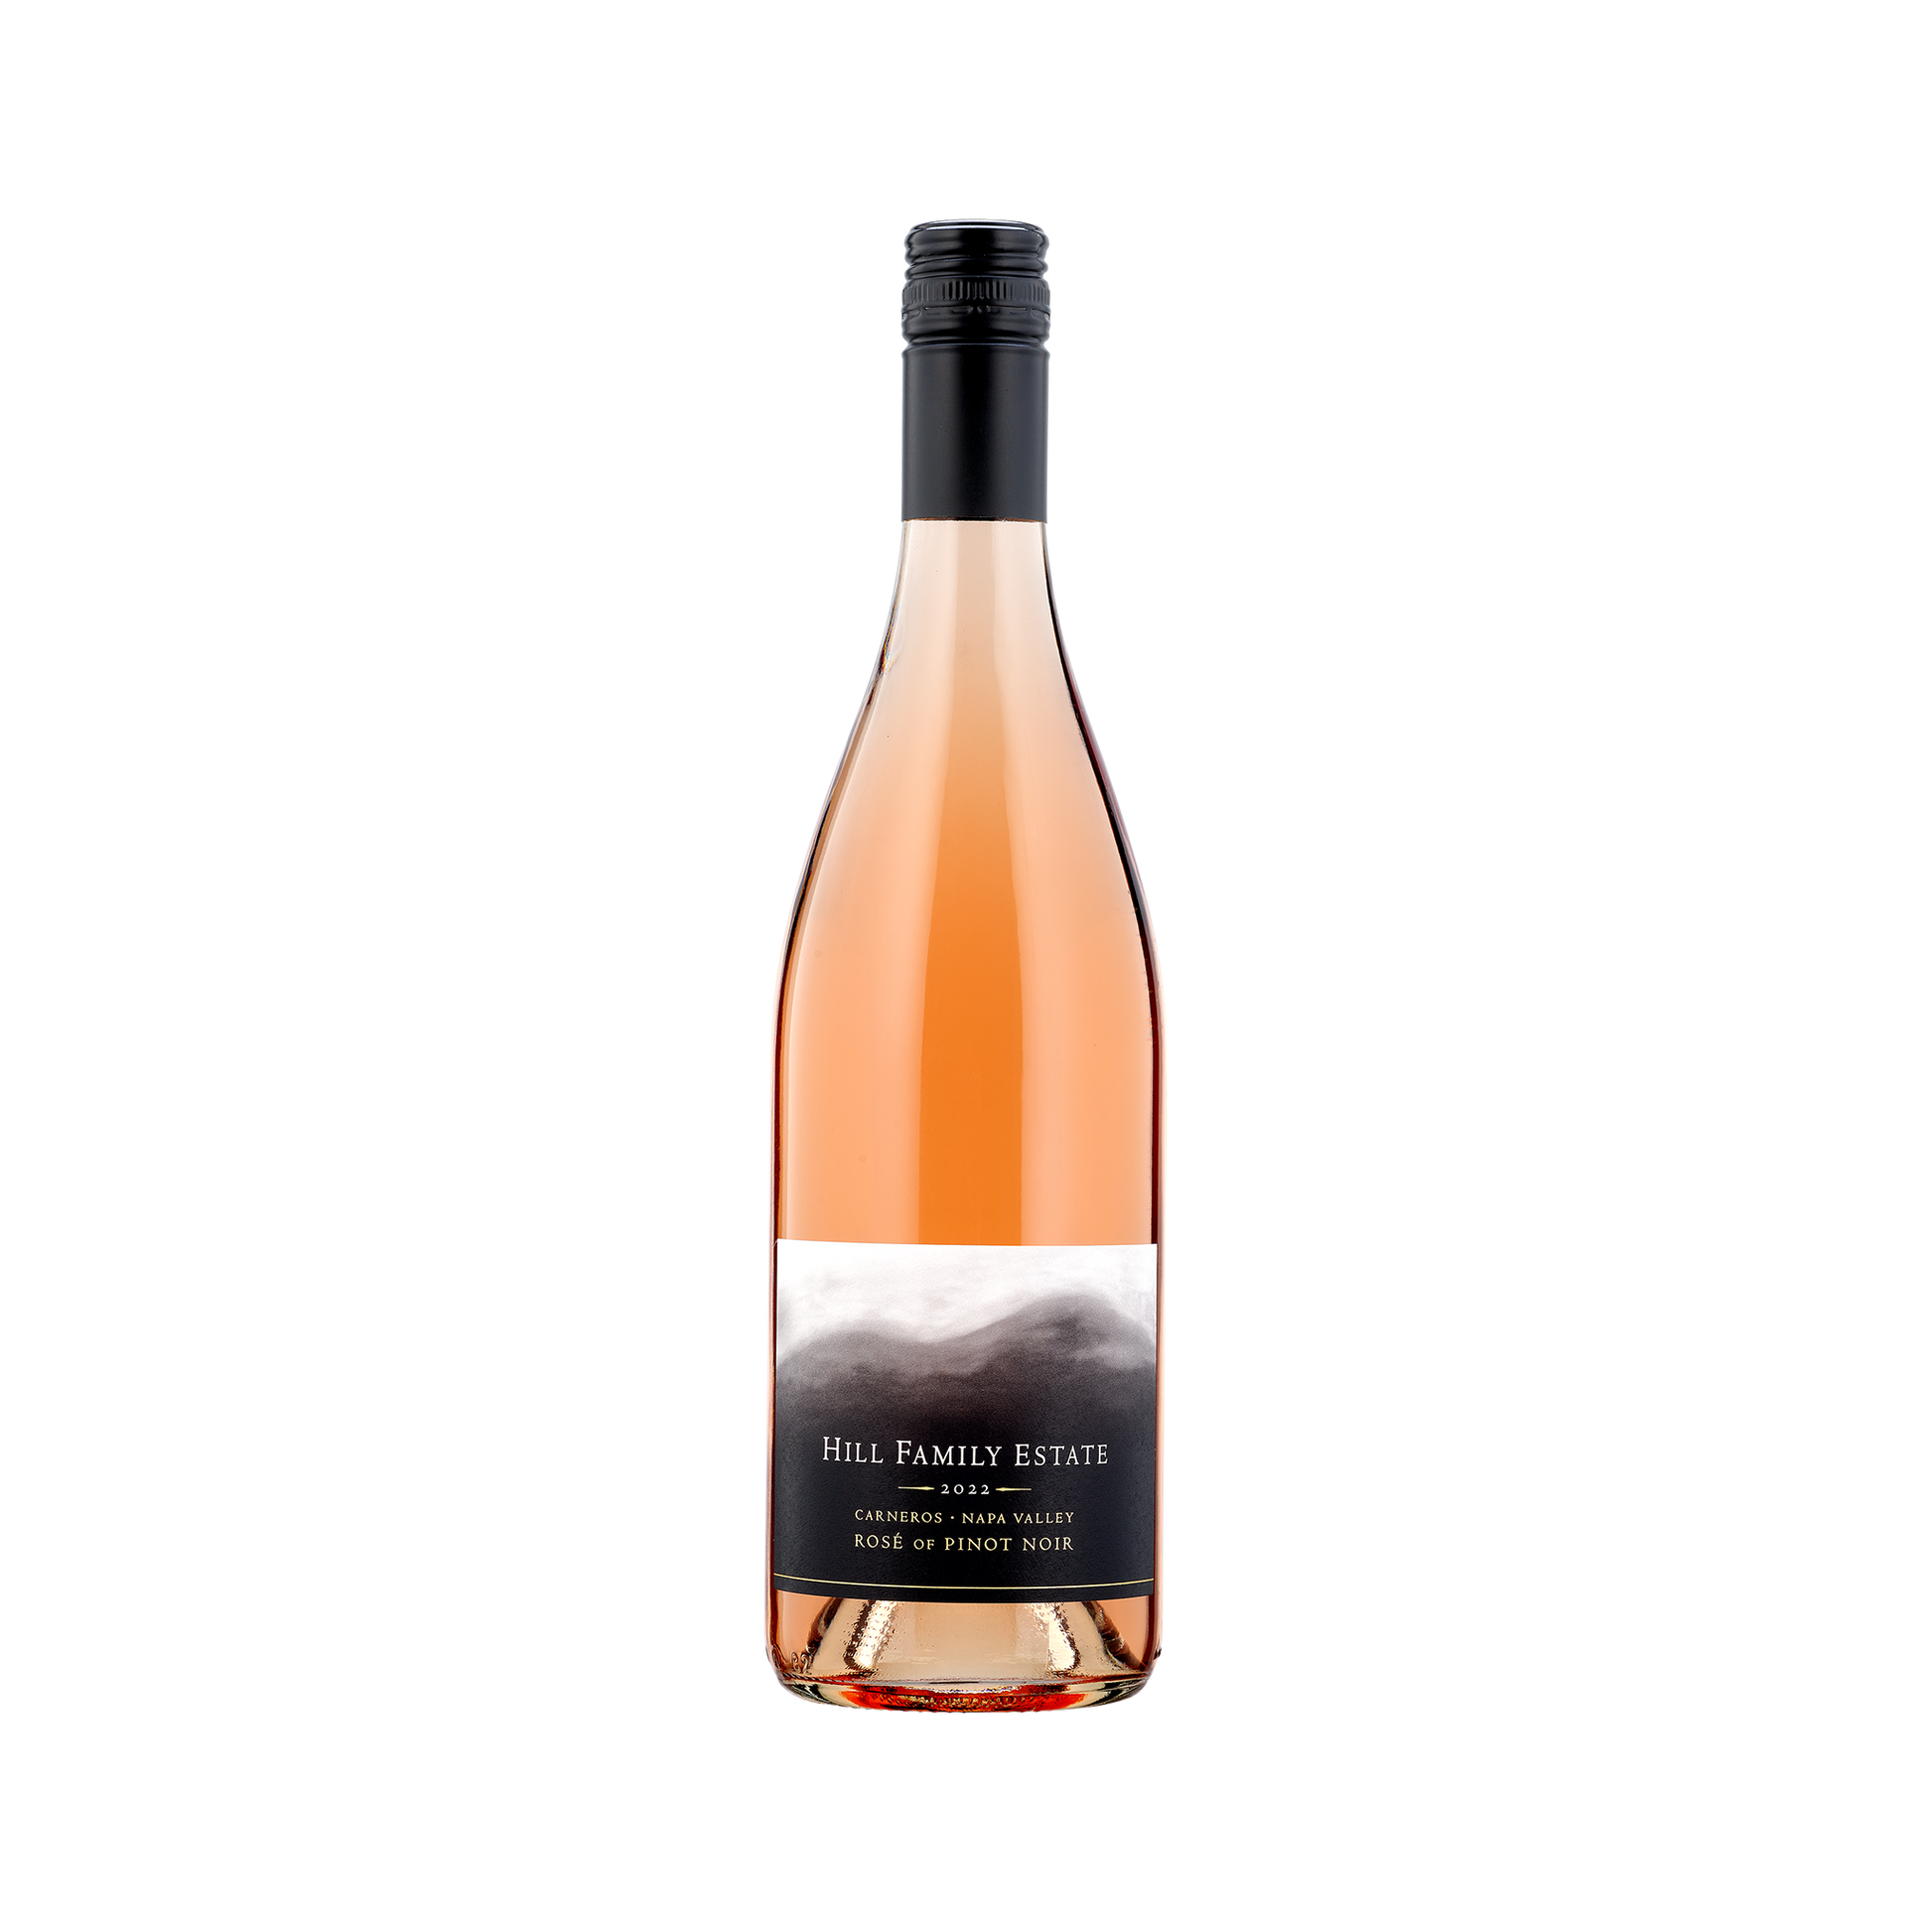 A bottle of Hill Family Estate 2022 Rose of Pinot Noir